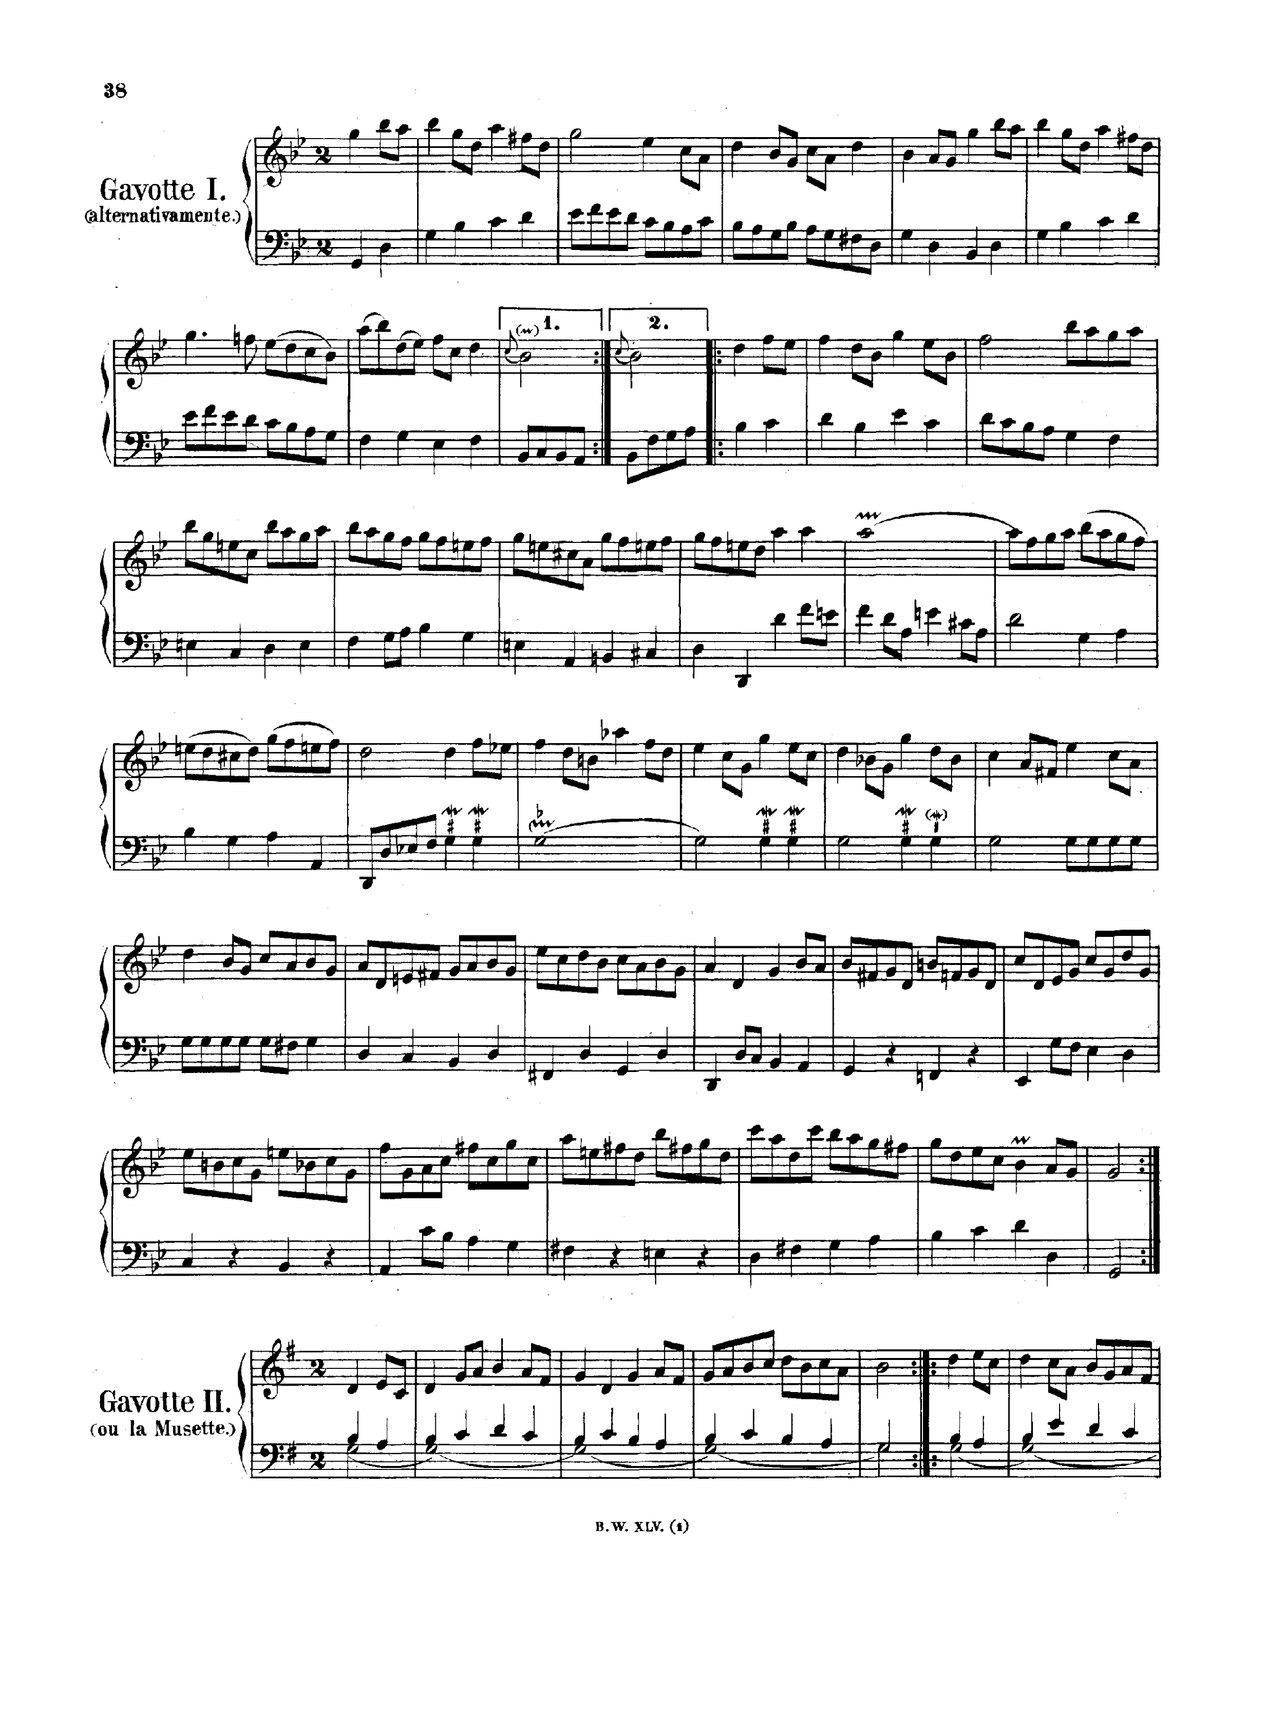 Prominente Punto muerto Edredón Musette (Gavotte II) from English Suite No. 3 in G minor, BWV 808 (Bach,  Johann Sebastian)(arrangement Suzuki) - Violinwiki